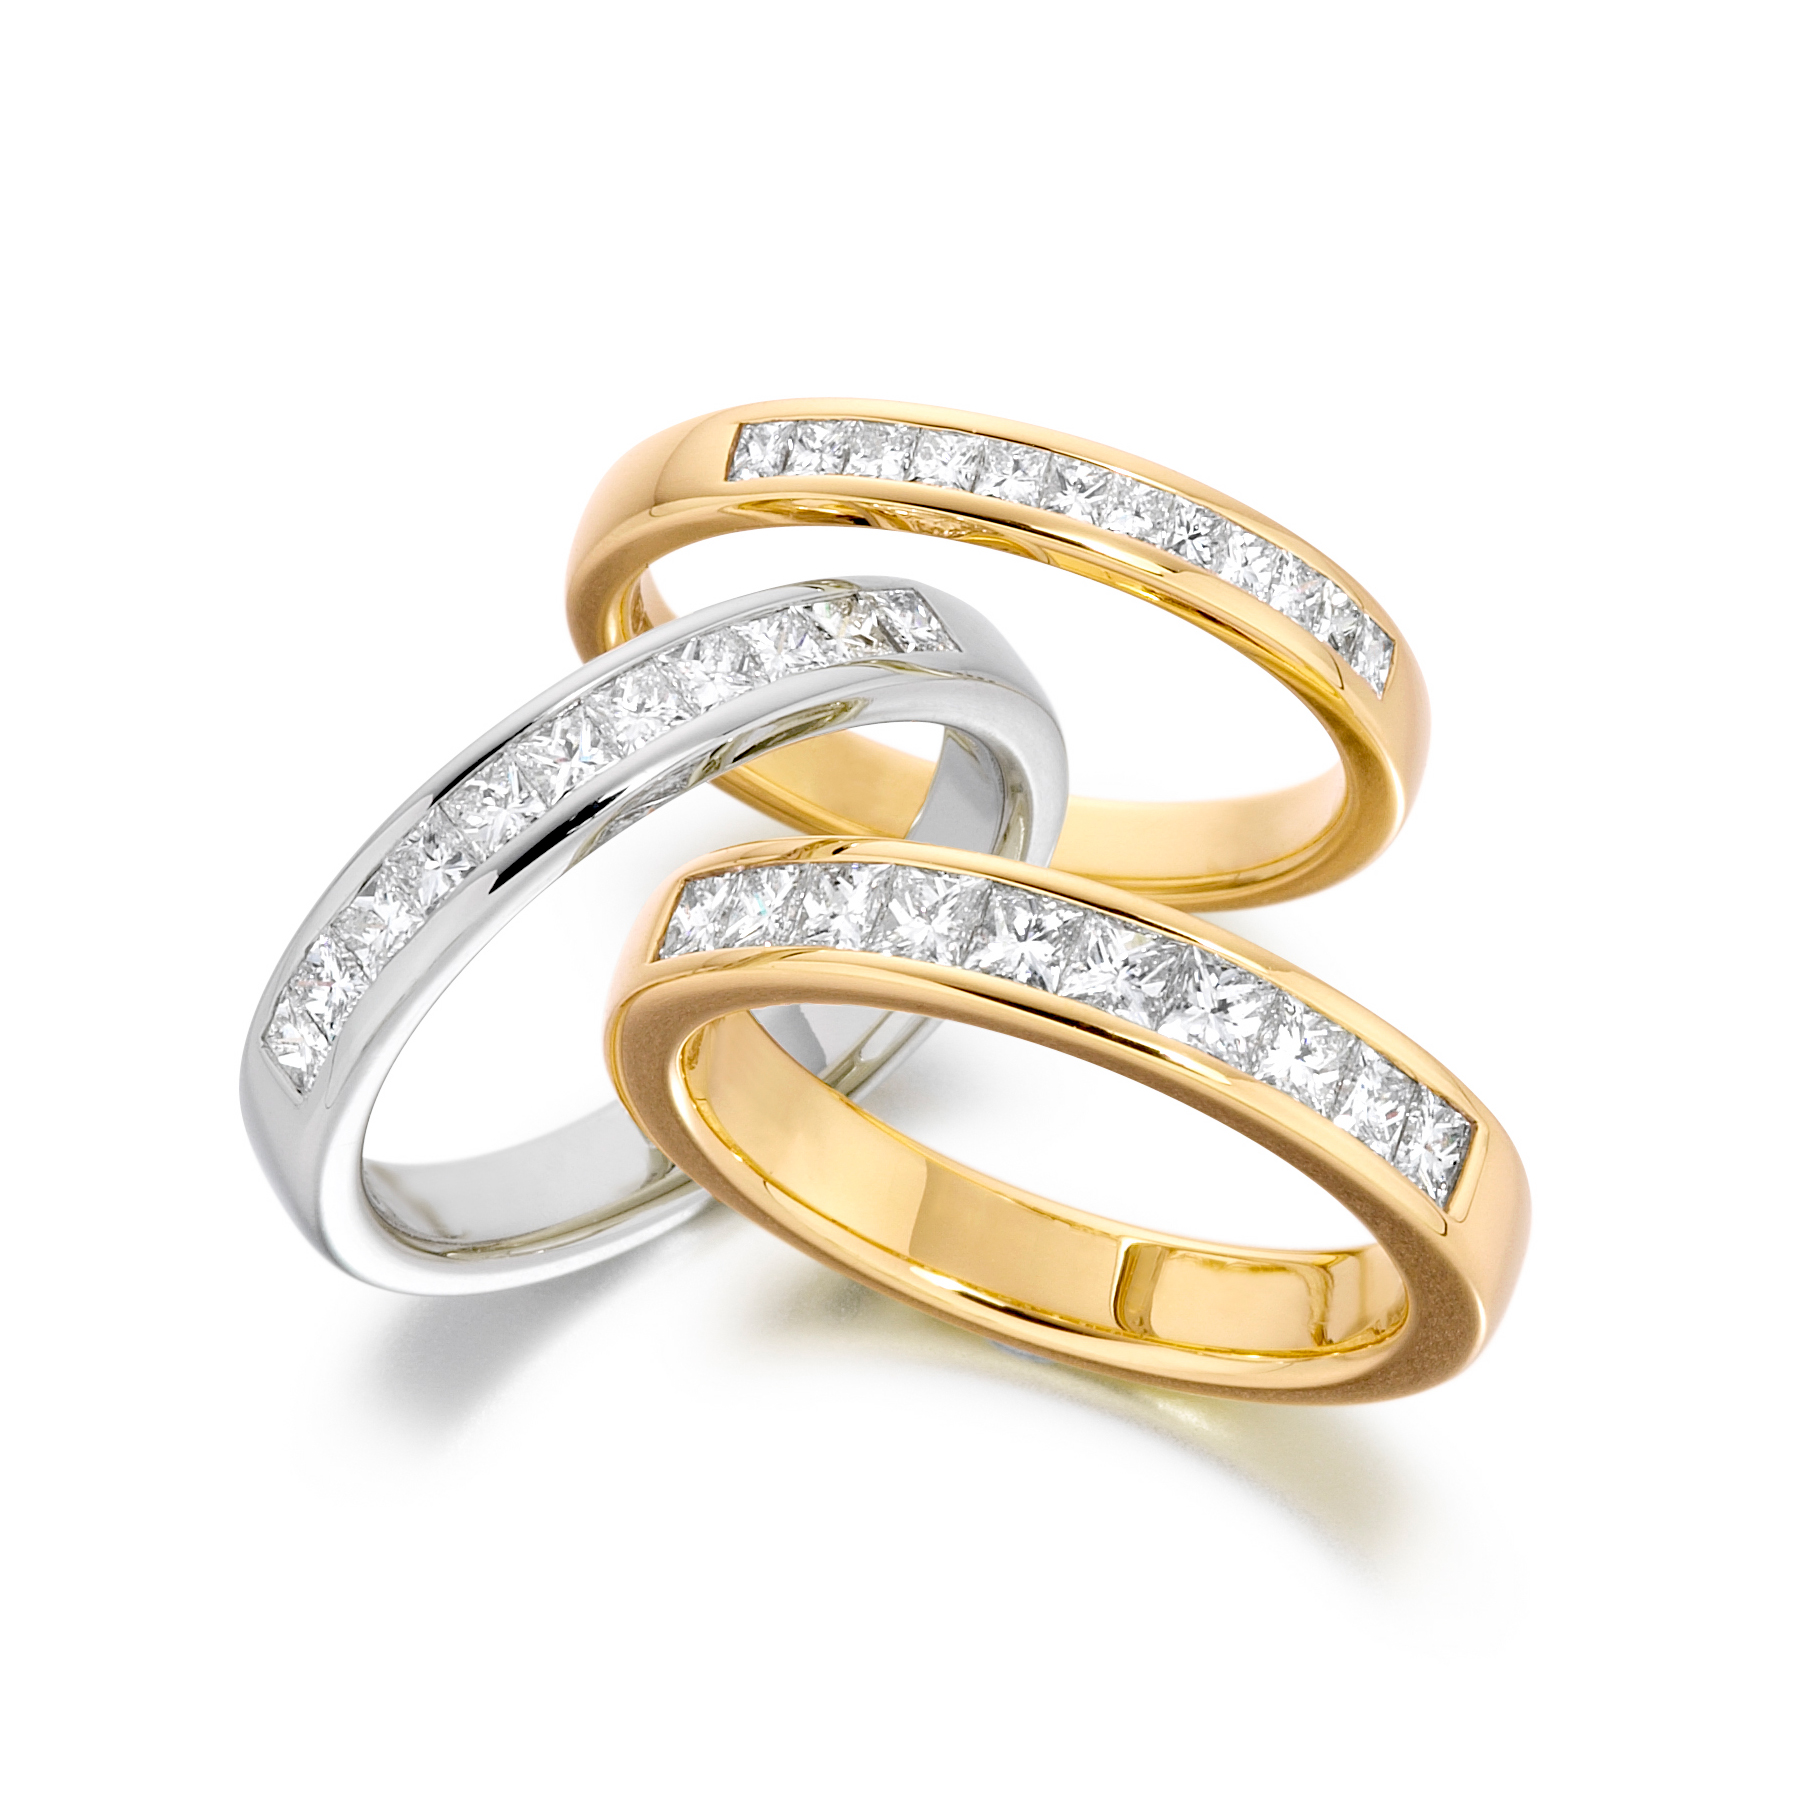 Princess-cut diamond half eternity rings